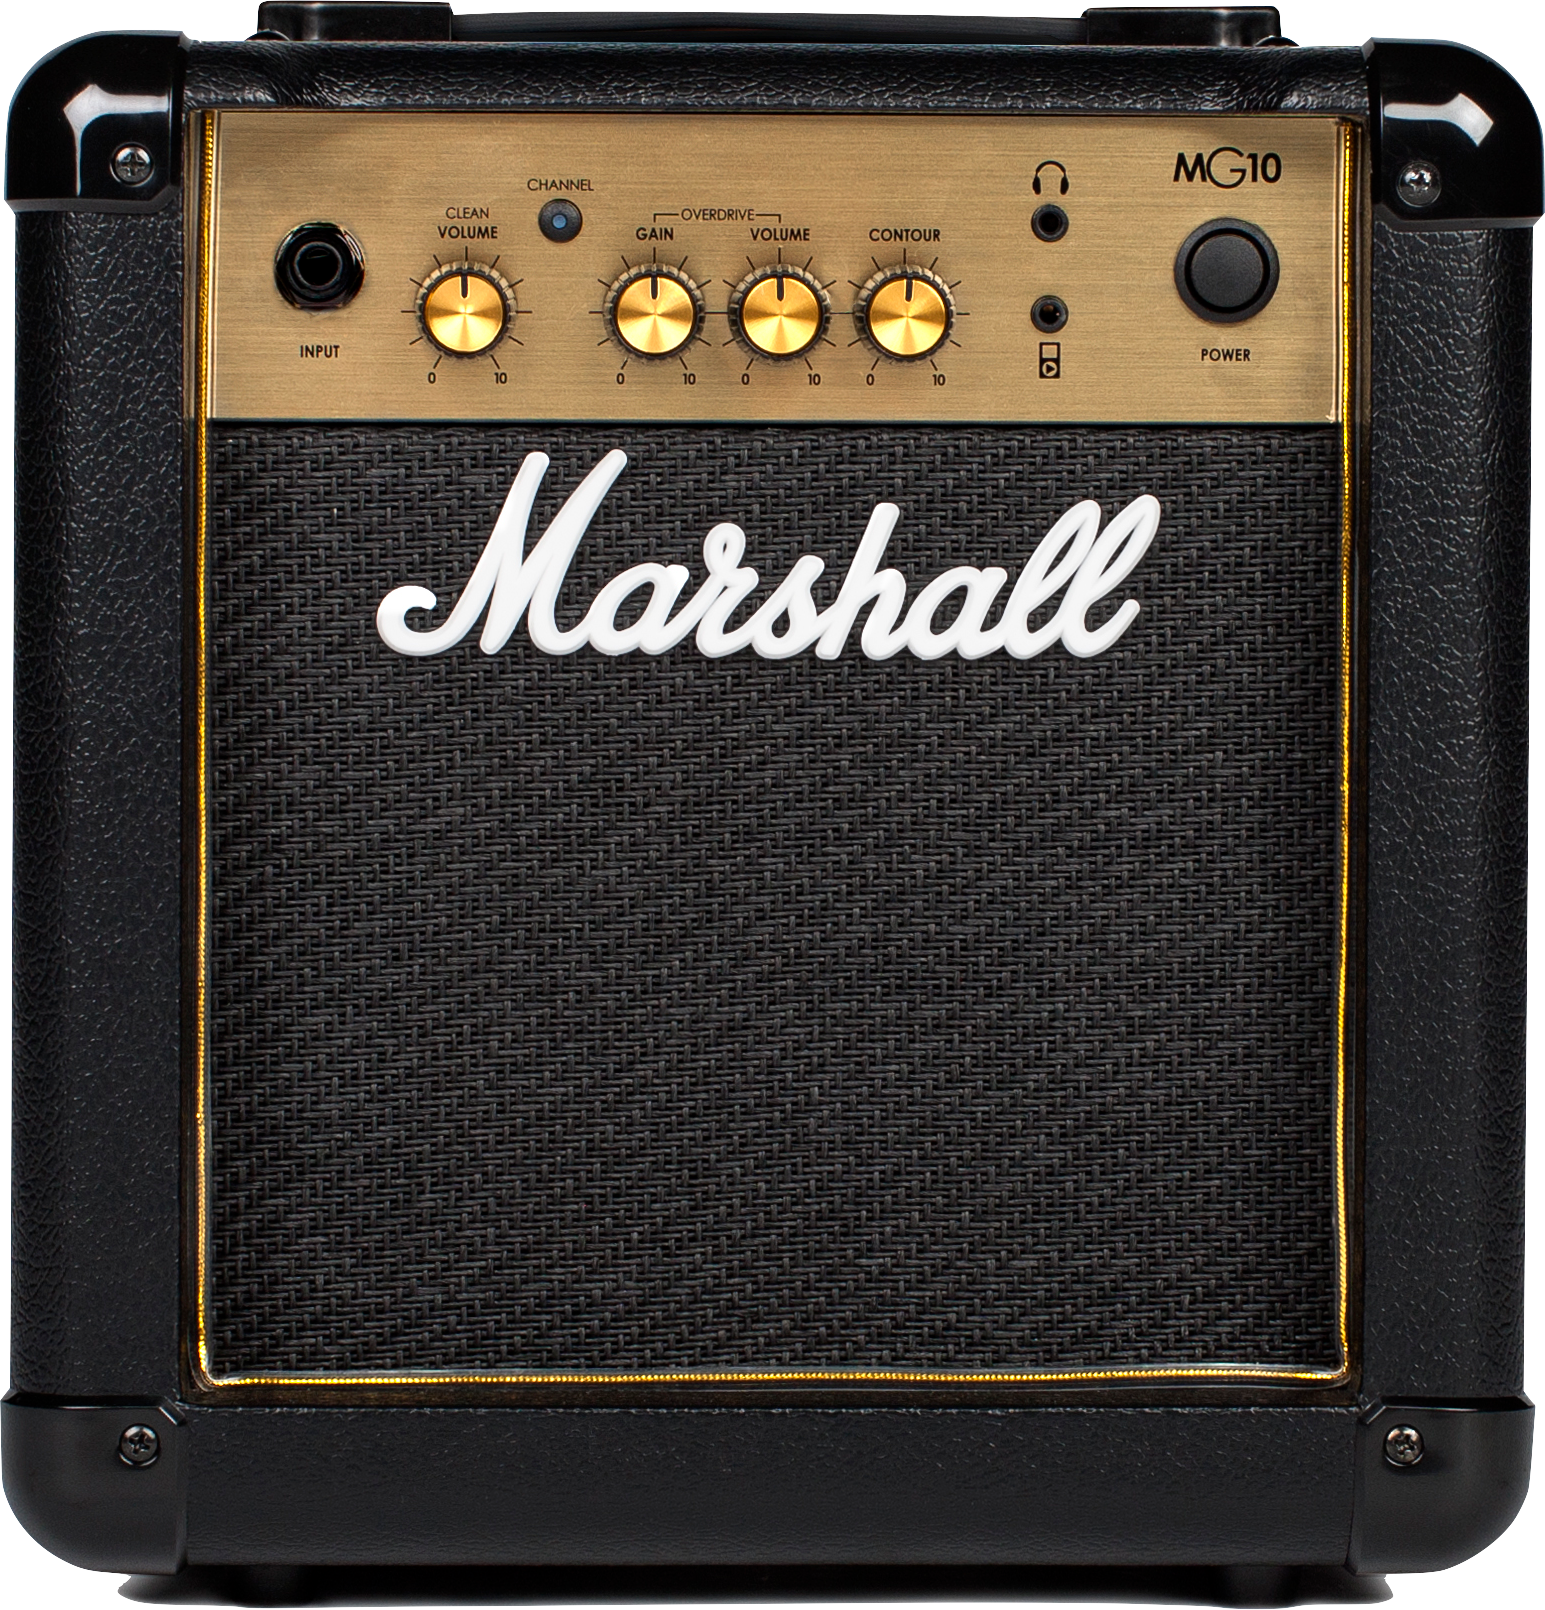 Marshall Mg10g Gold Combo 10 W - Combo amplificador para guitarra eléctrica - Variation 1